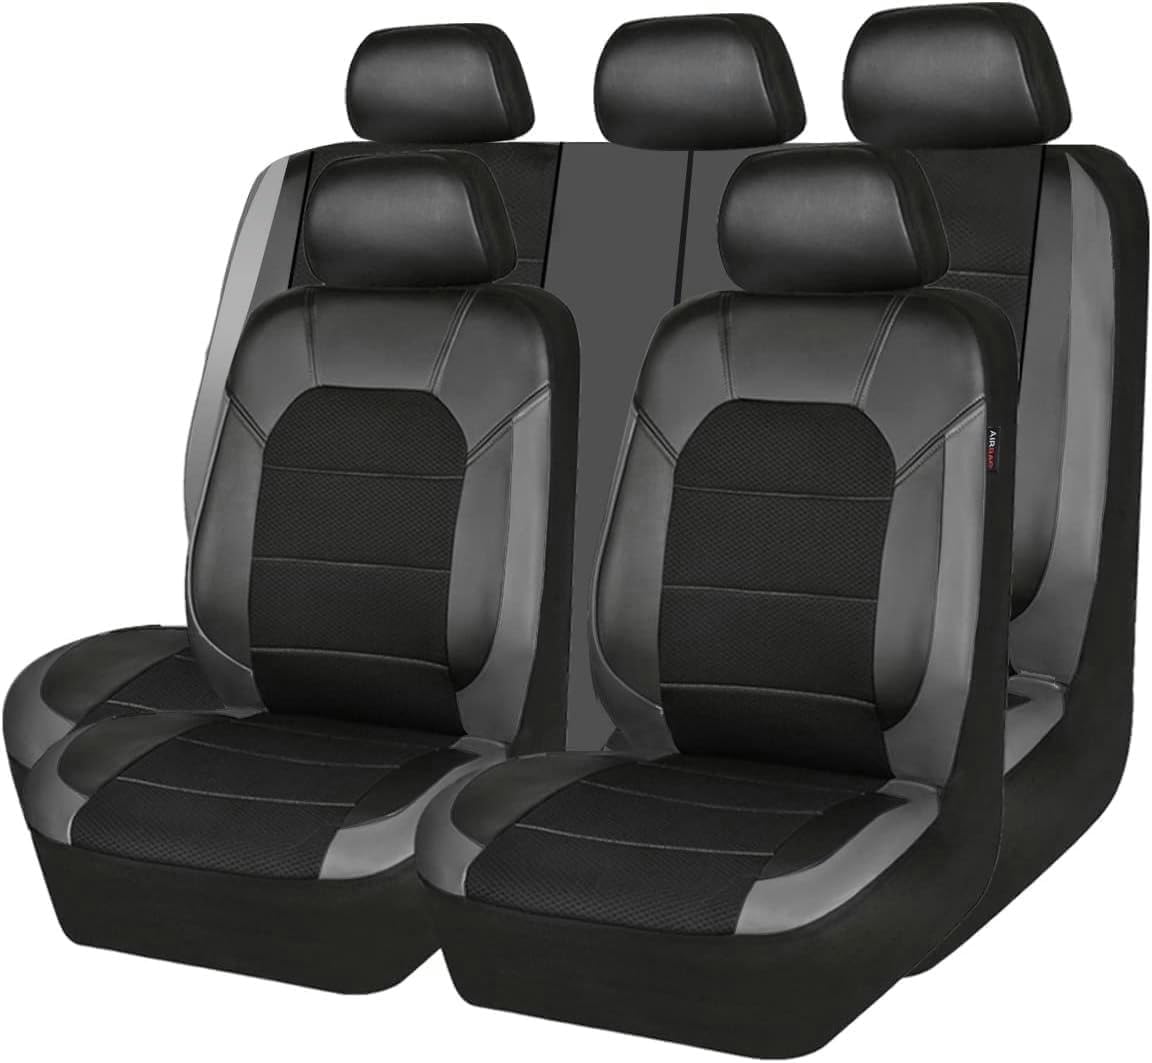 JOSKAA Autositzbezüge Universal passend für Mercedes Benz W204 W211 W210 W124 W212 W202 W245 W163 Cla Gls Gla Glc A/B/C/E Klasse Sitzbezug-Sets von JOSKAA